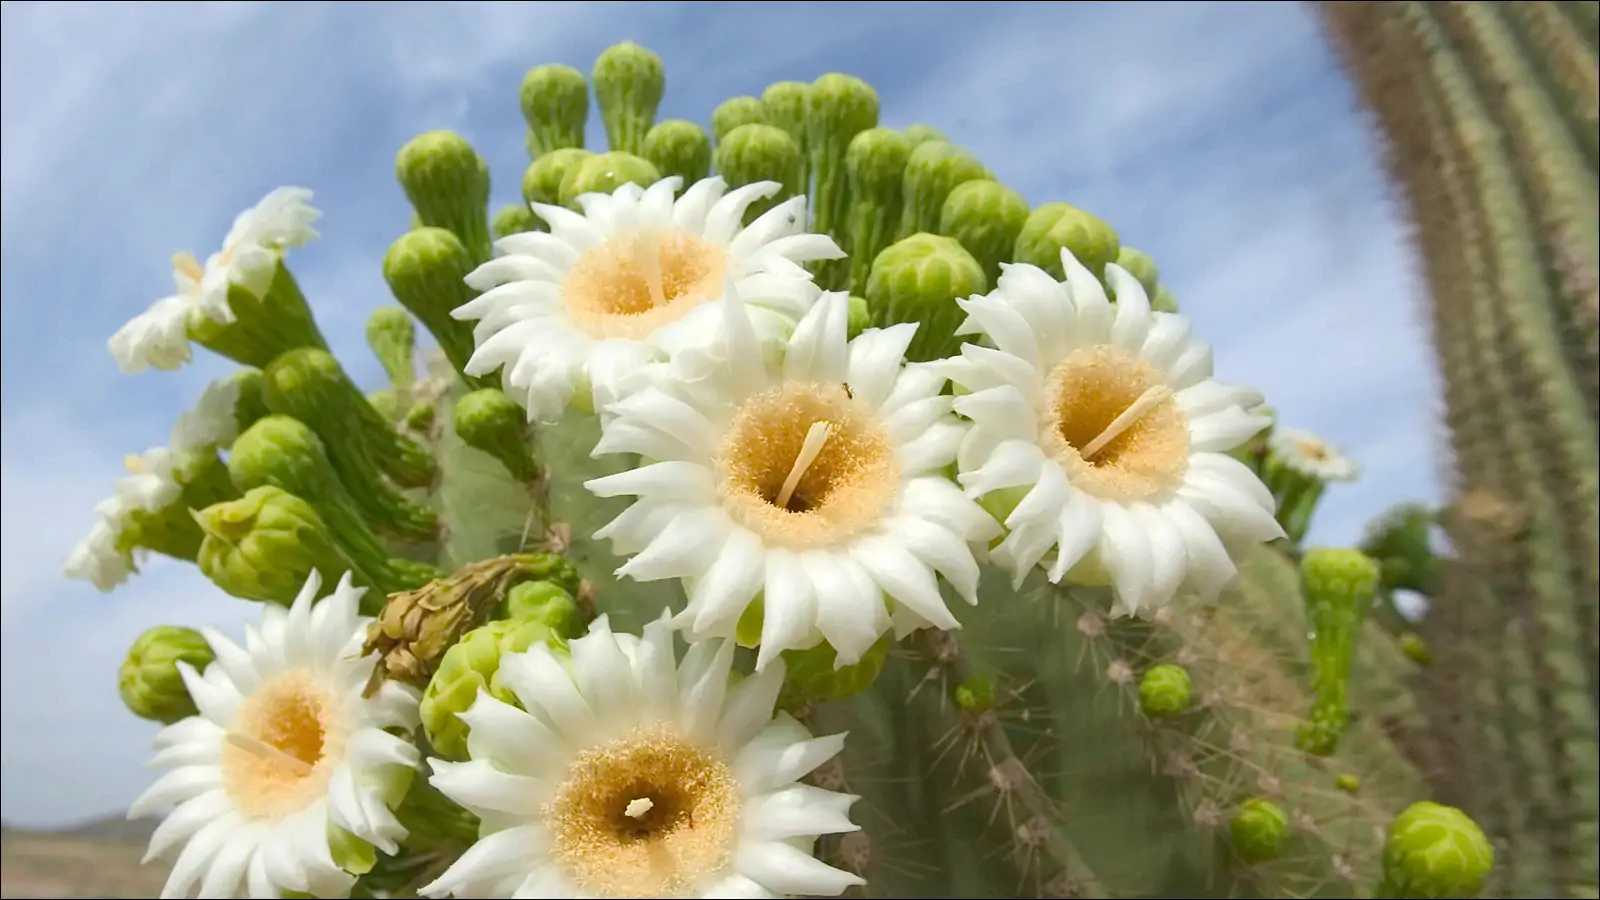 Цветы кактуса сагуара символ штата Аризона